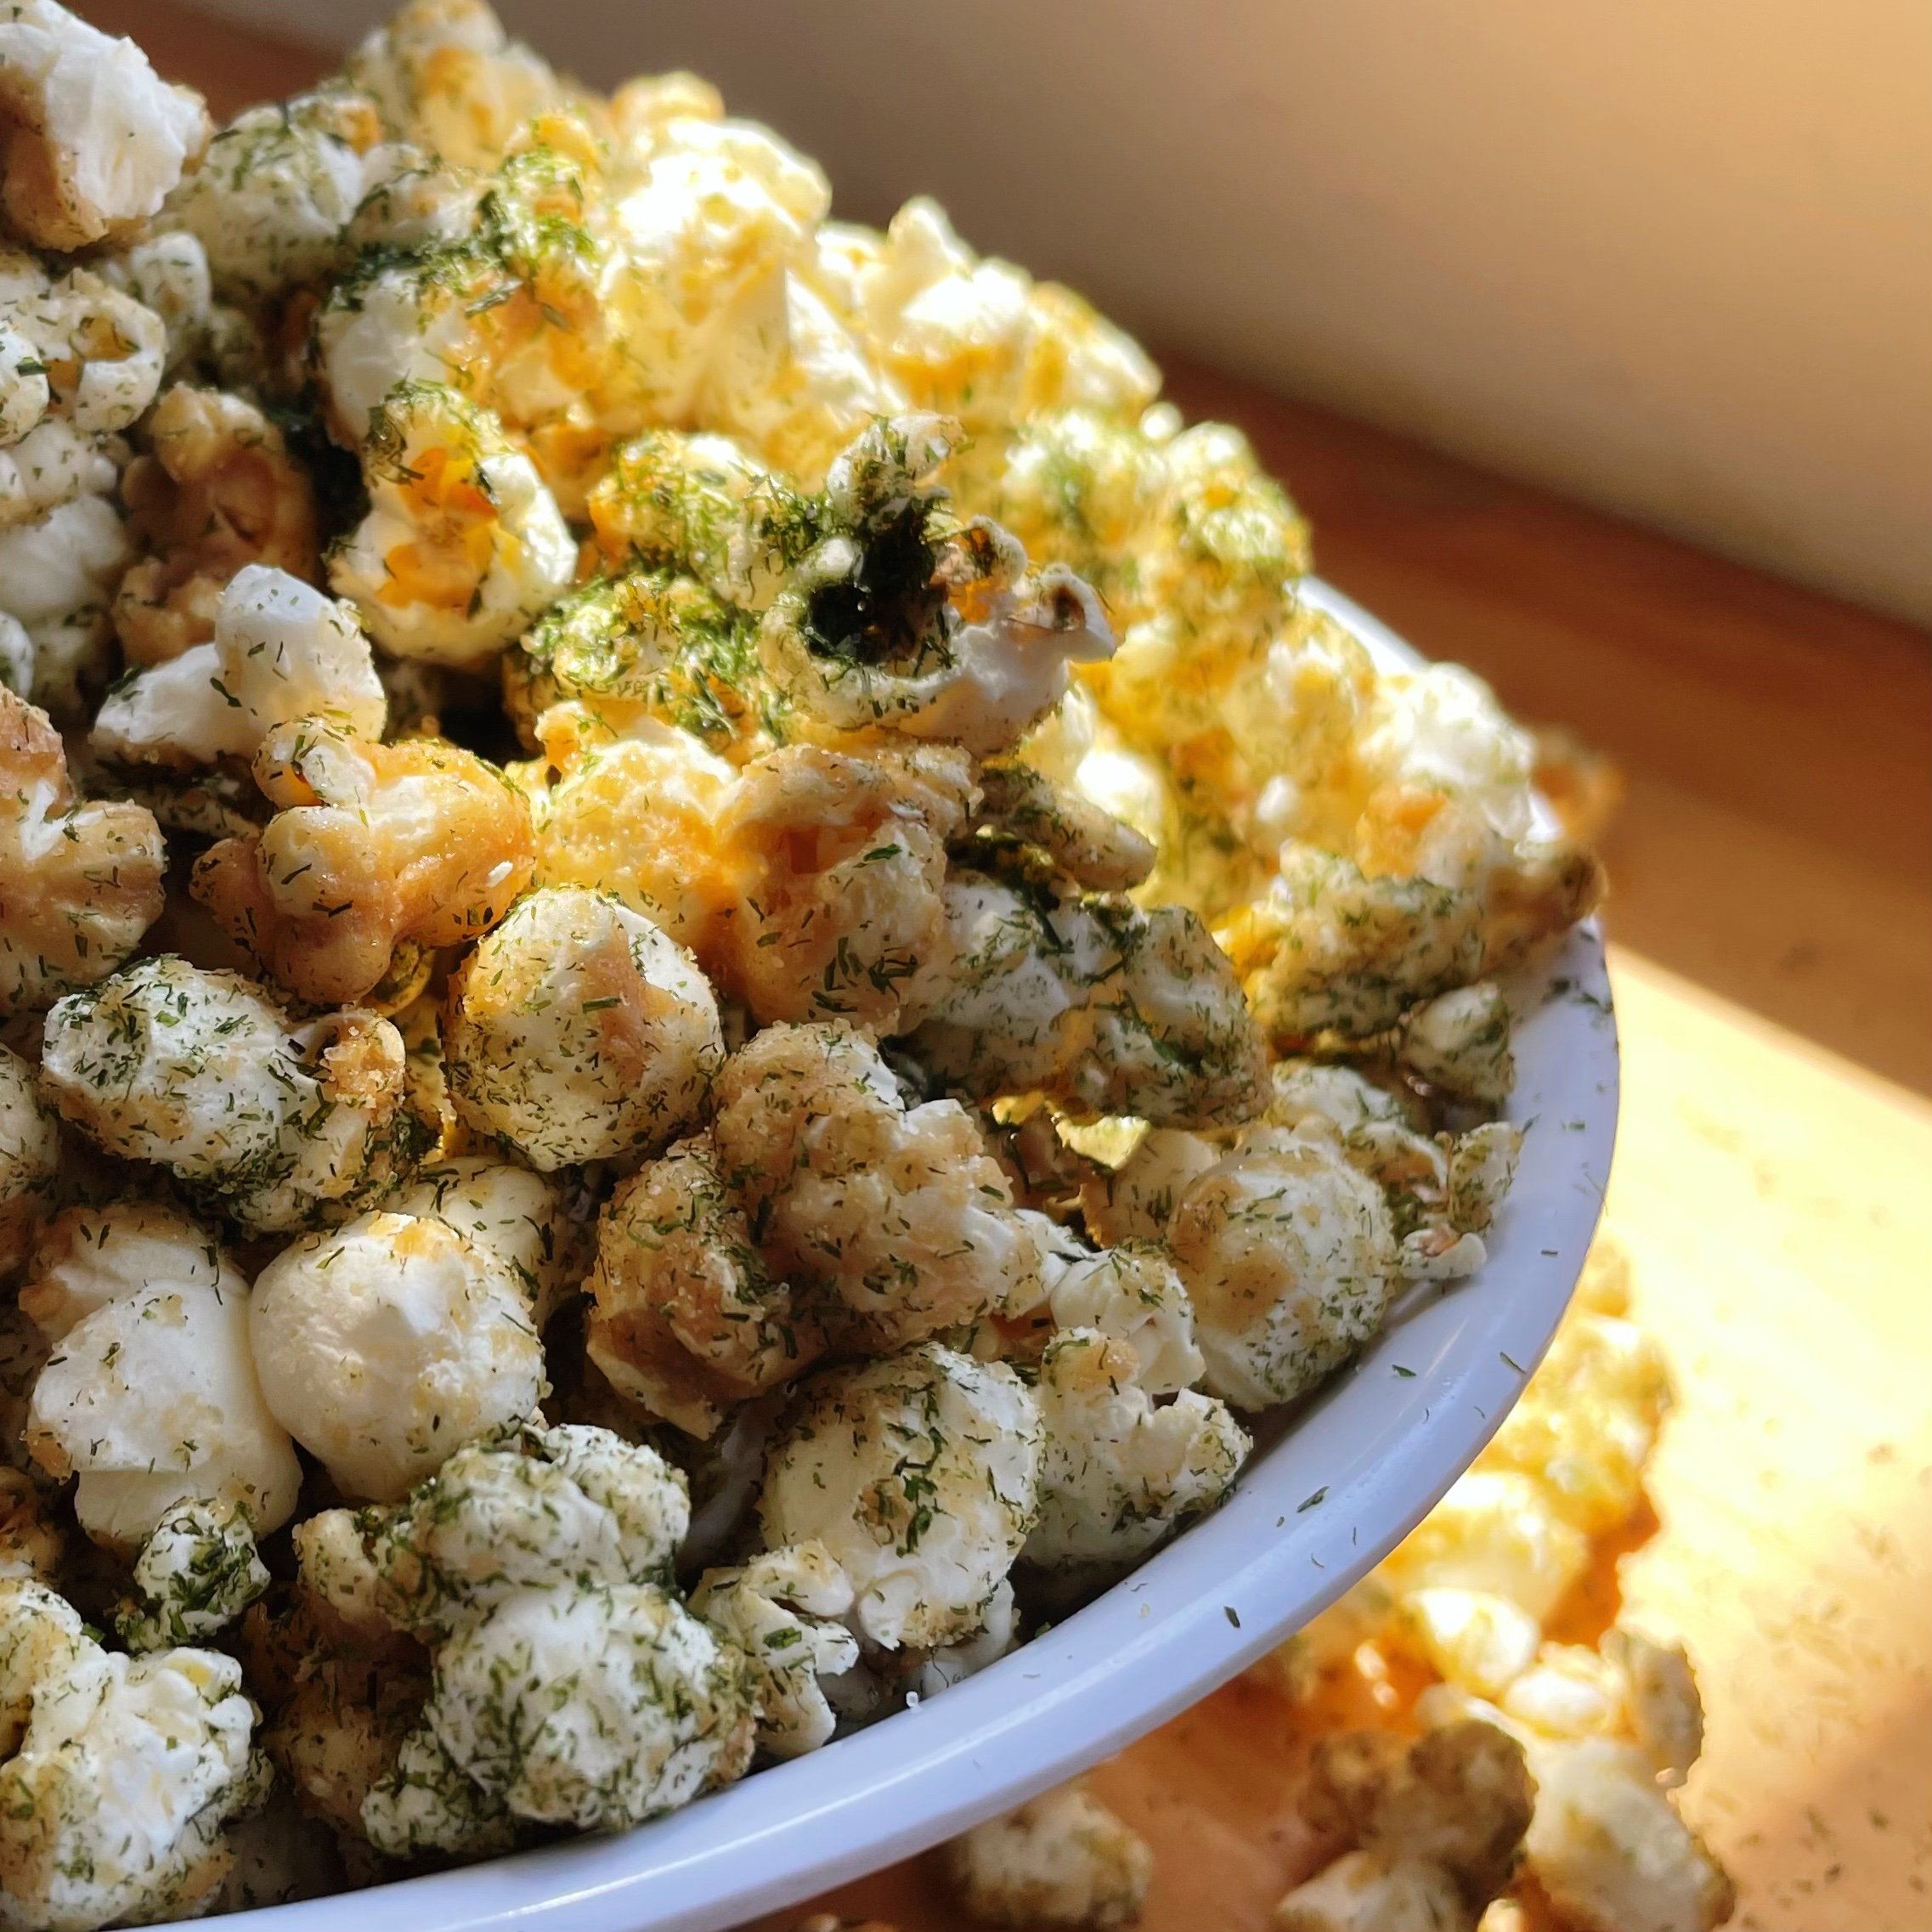 Sea moss seasoned popcorn